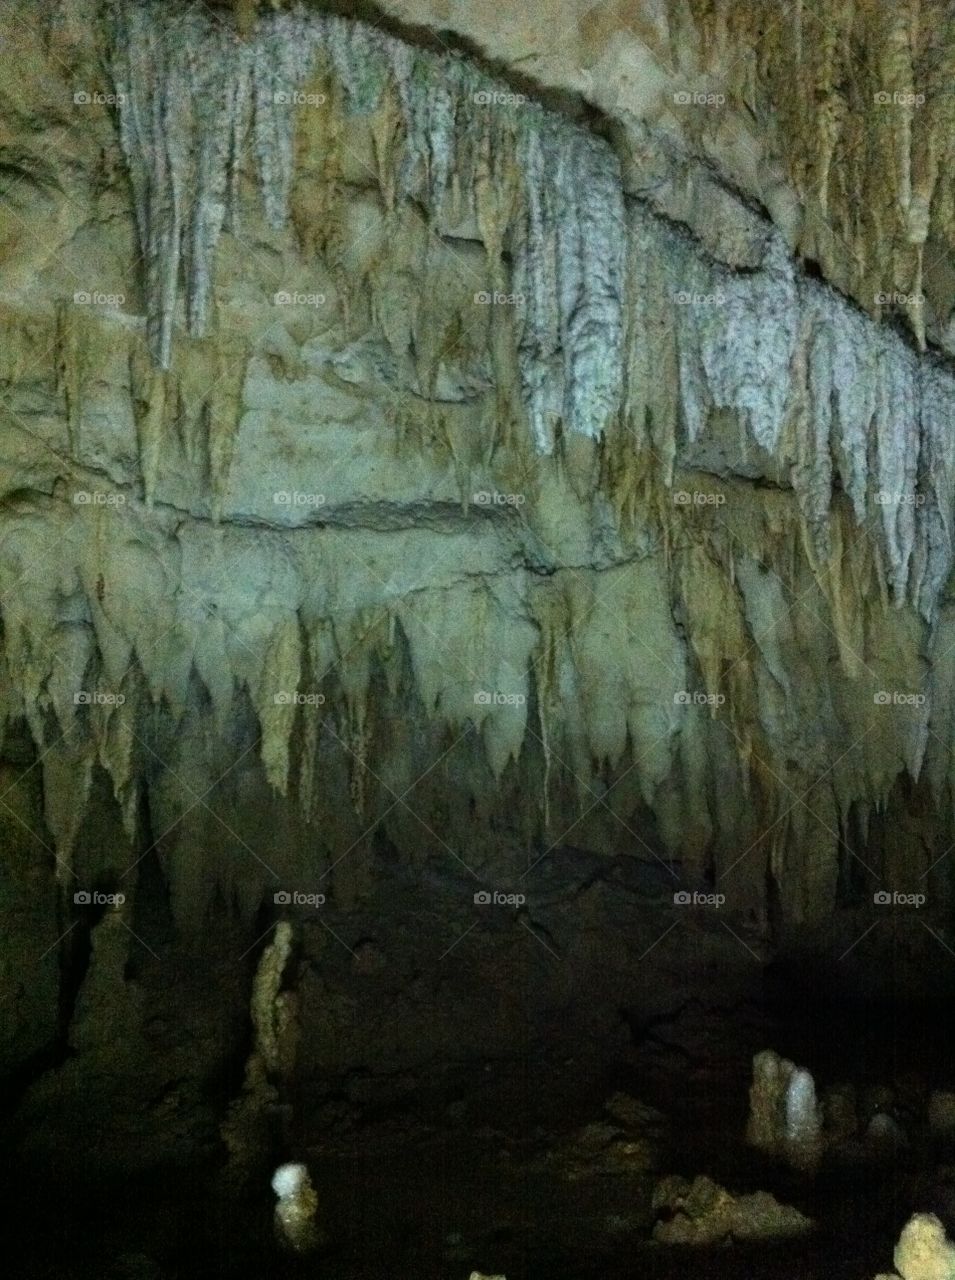 Cave, Stalactite, Subway System, Limestone, Grotto